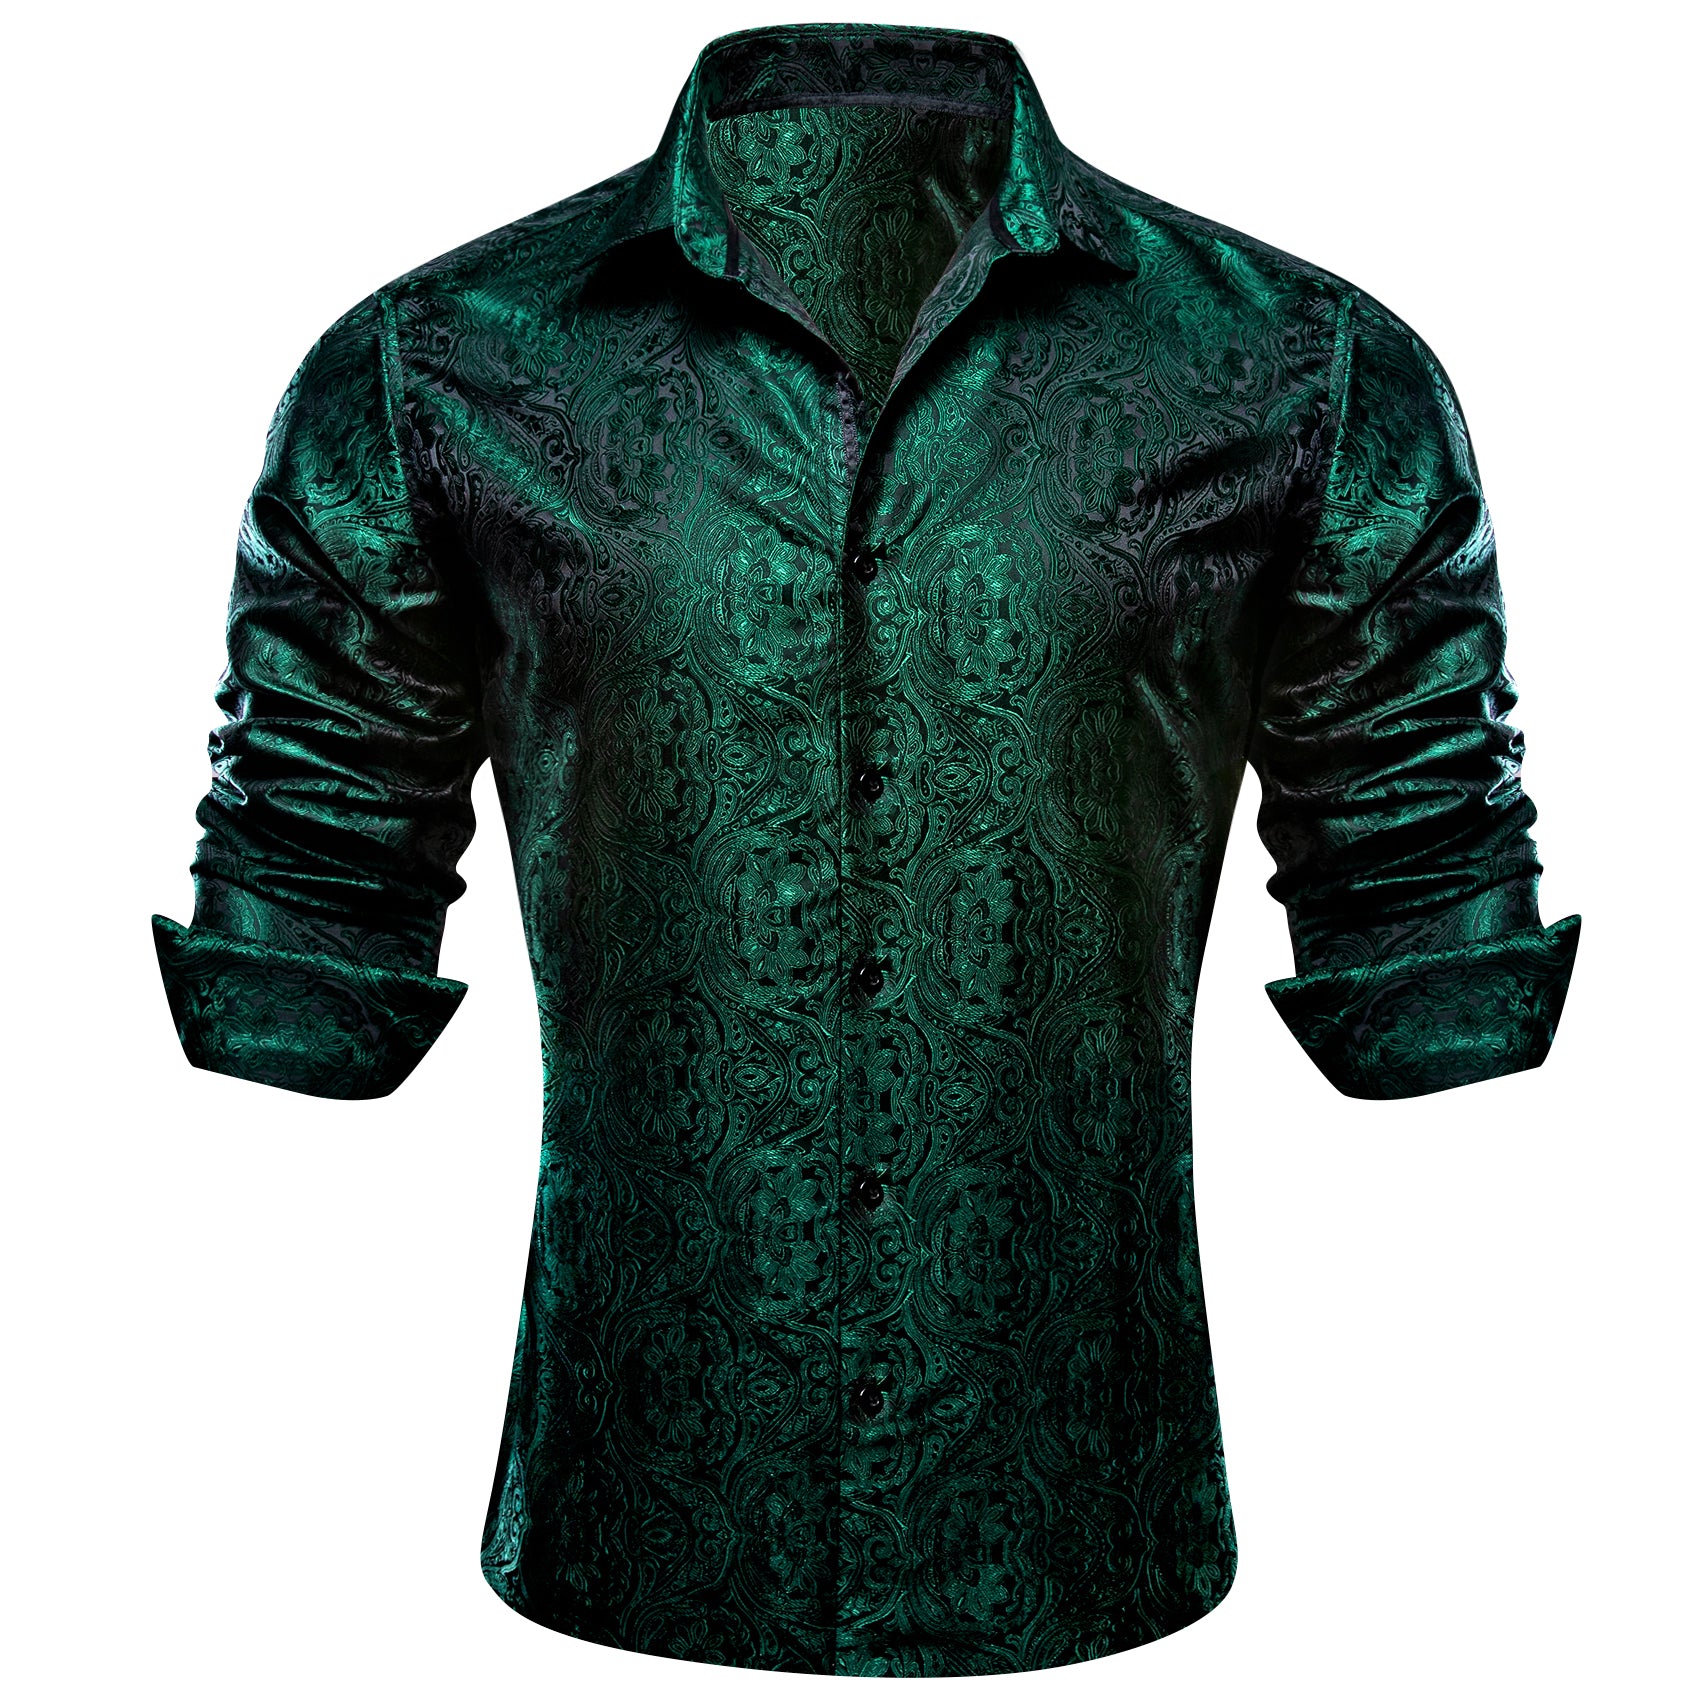 Barry.wang New Black Green Paisley Men's Silk Shirt